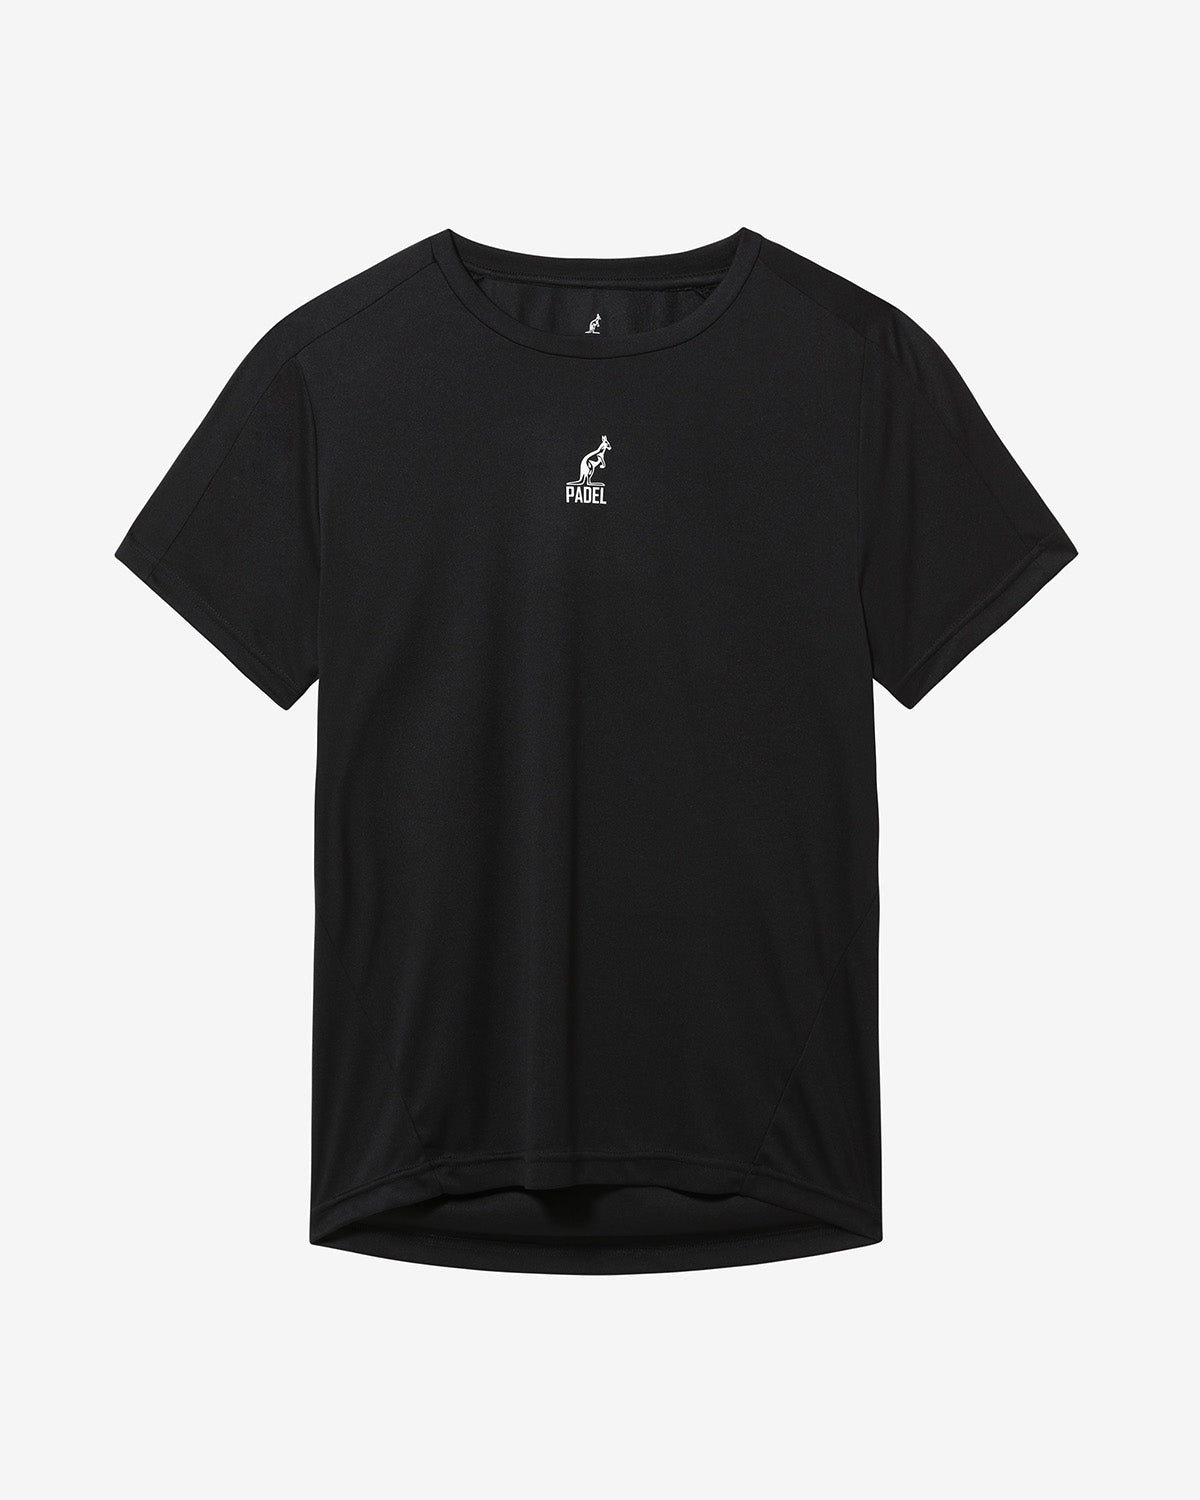 Basic Padel T-shirt: Australian Padel